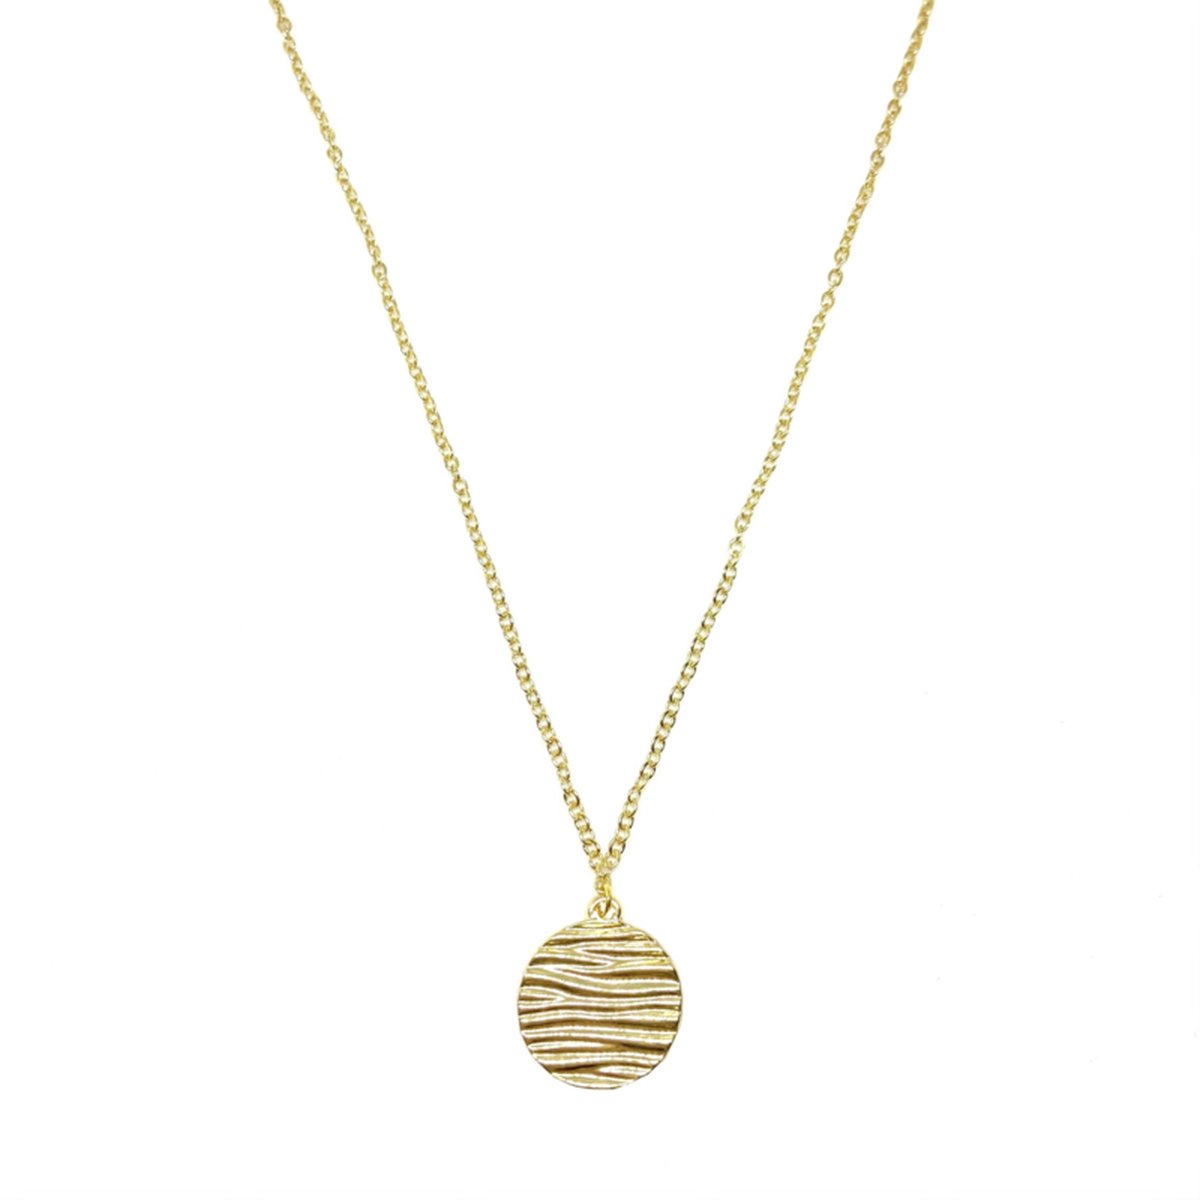 Zebra coin necklace - gold